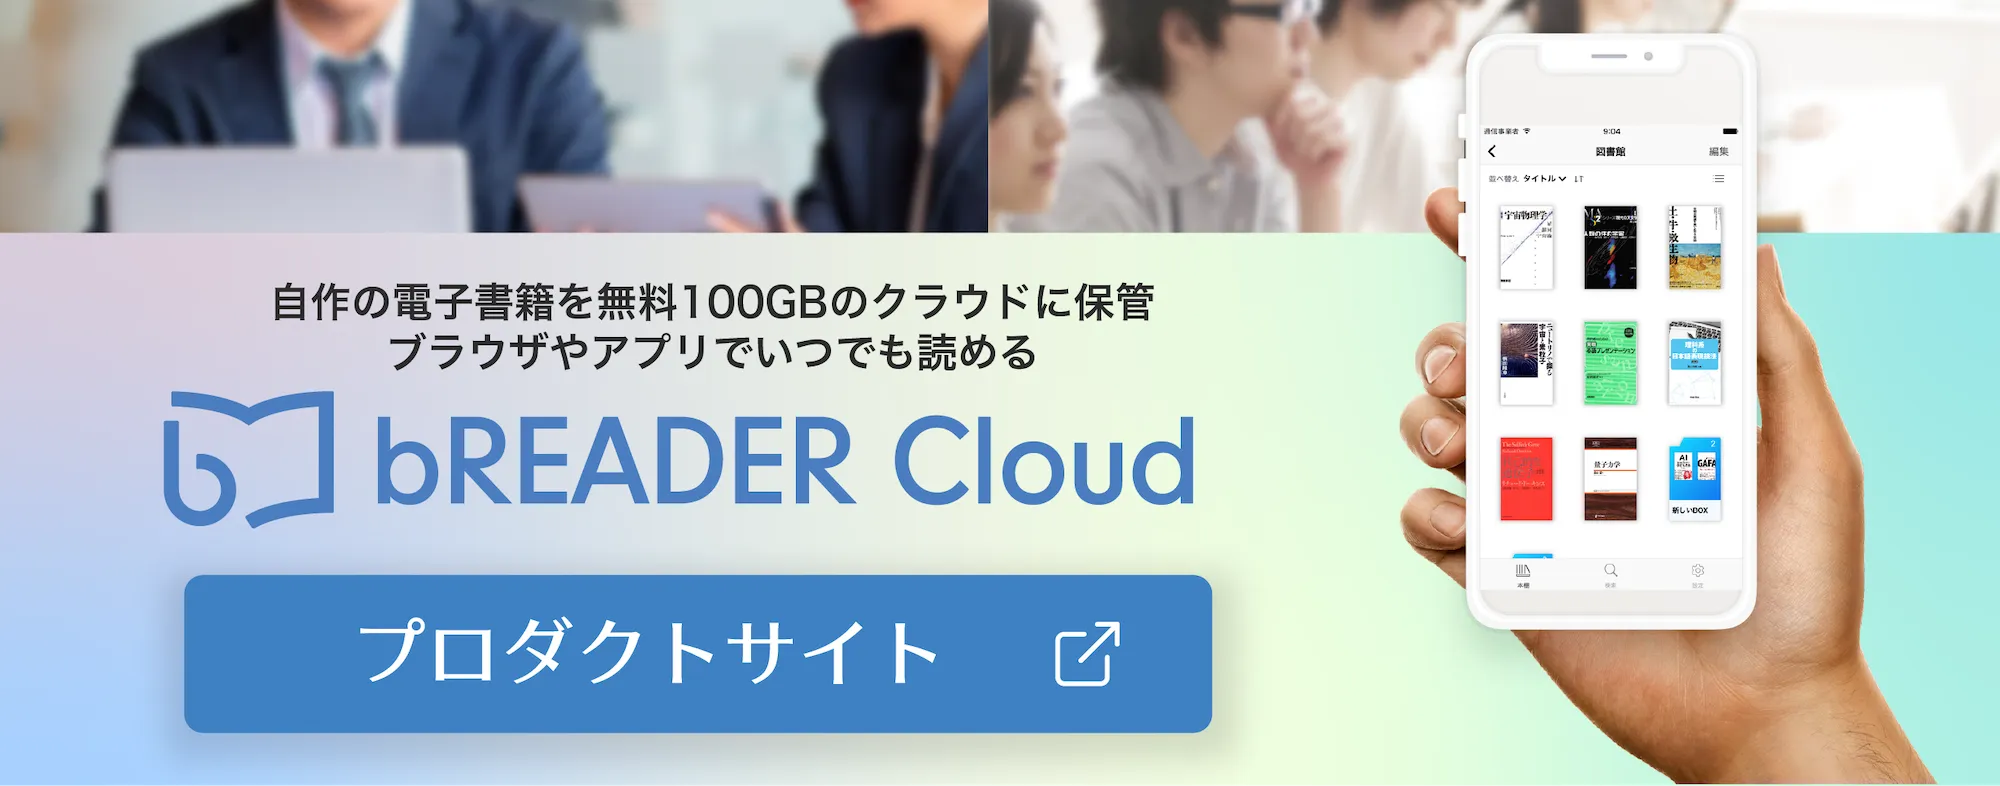 bREADER Cloud